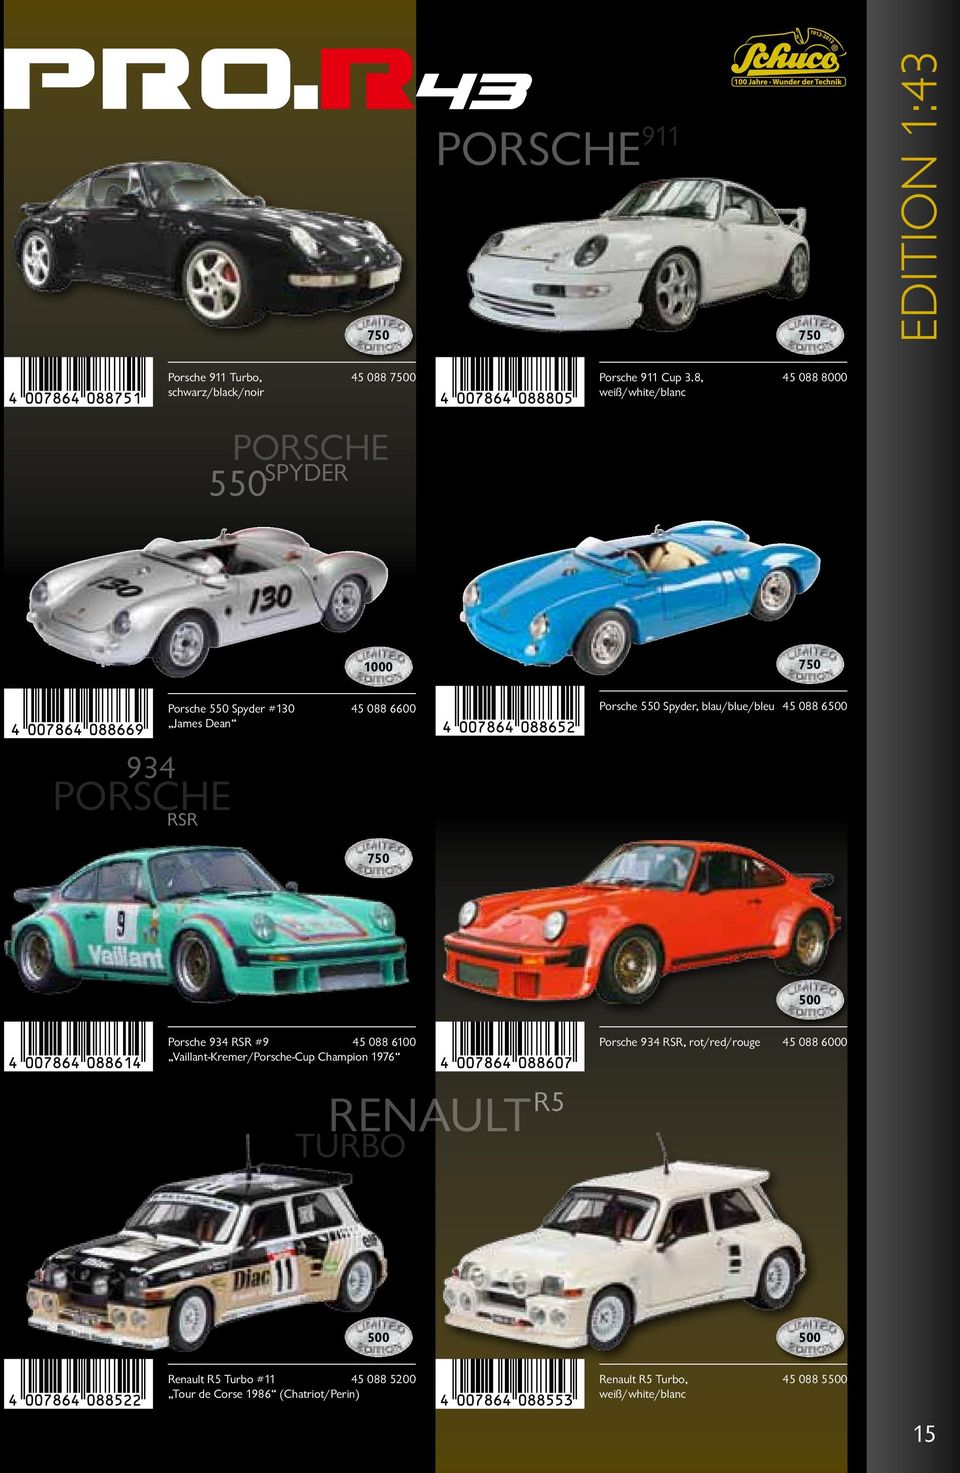 Spyder, blau/blue/bleu 45 088 6500 750 500 Porsche 934 RSR #9 45 088 6100 Vaillant-Kremer/Porsche-Cup Champion 1976 Porsche 934 RSR,